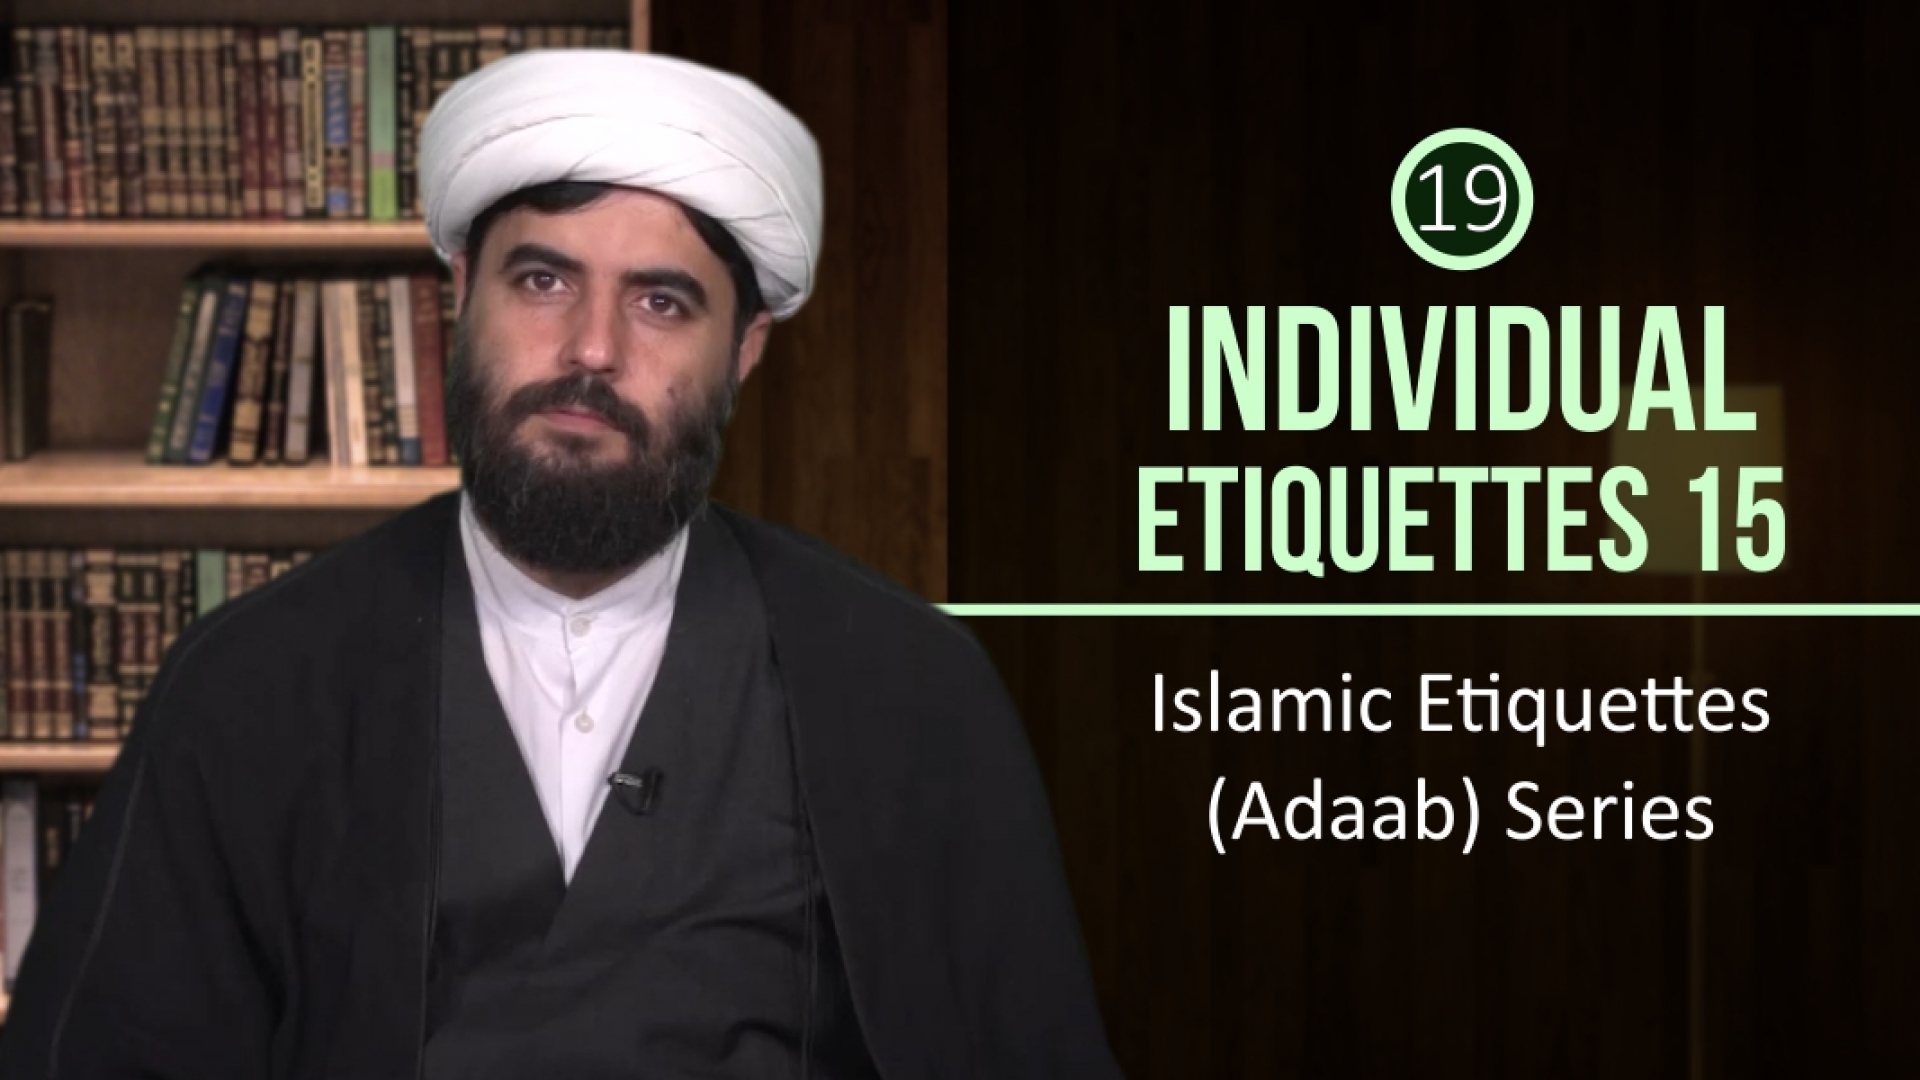 Individual Etiquettes 15 | Islamic Etiquettes (Adaab) Series | Farsi sub English